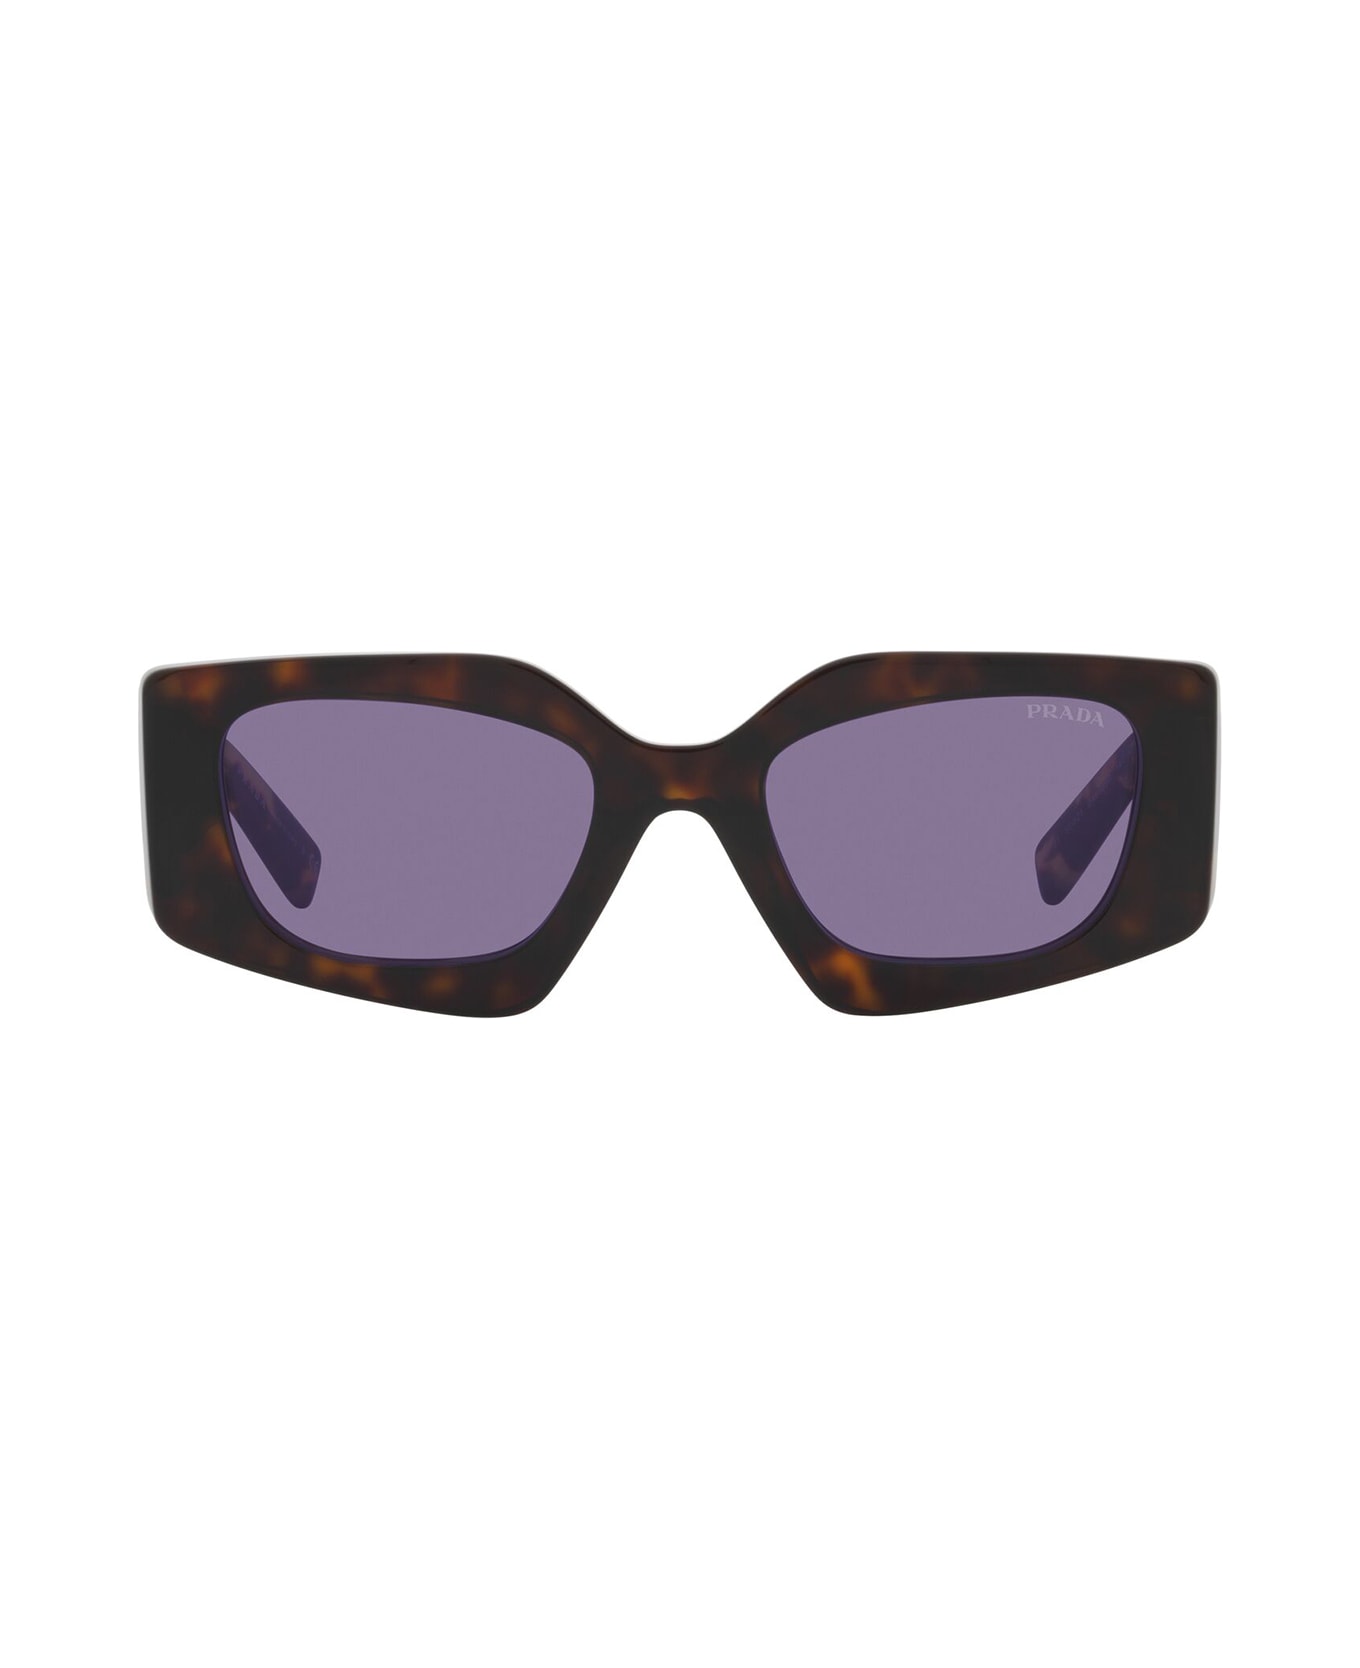 Prada Eyewear Pr 15ys Tortoise Sunglasses - Tortoise